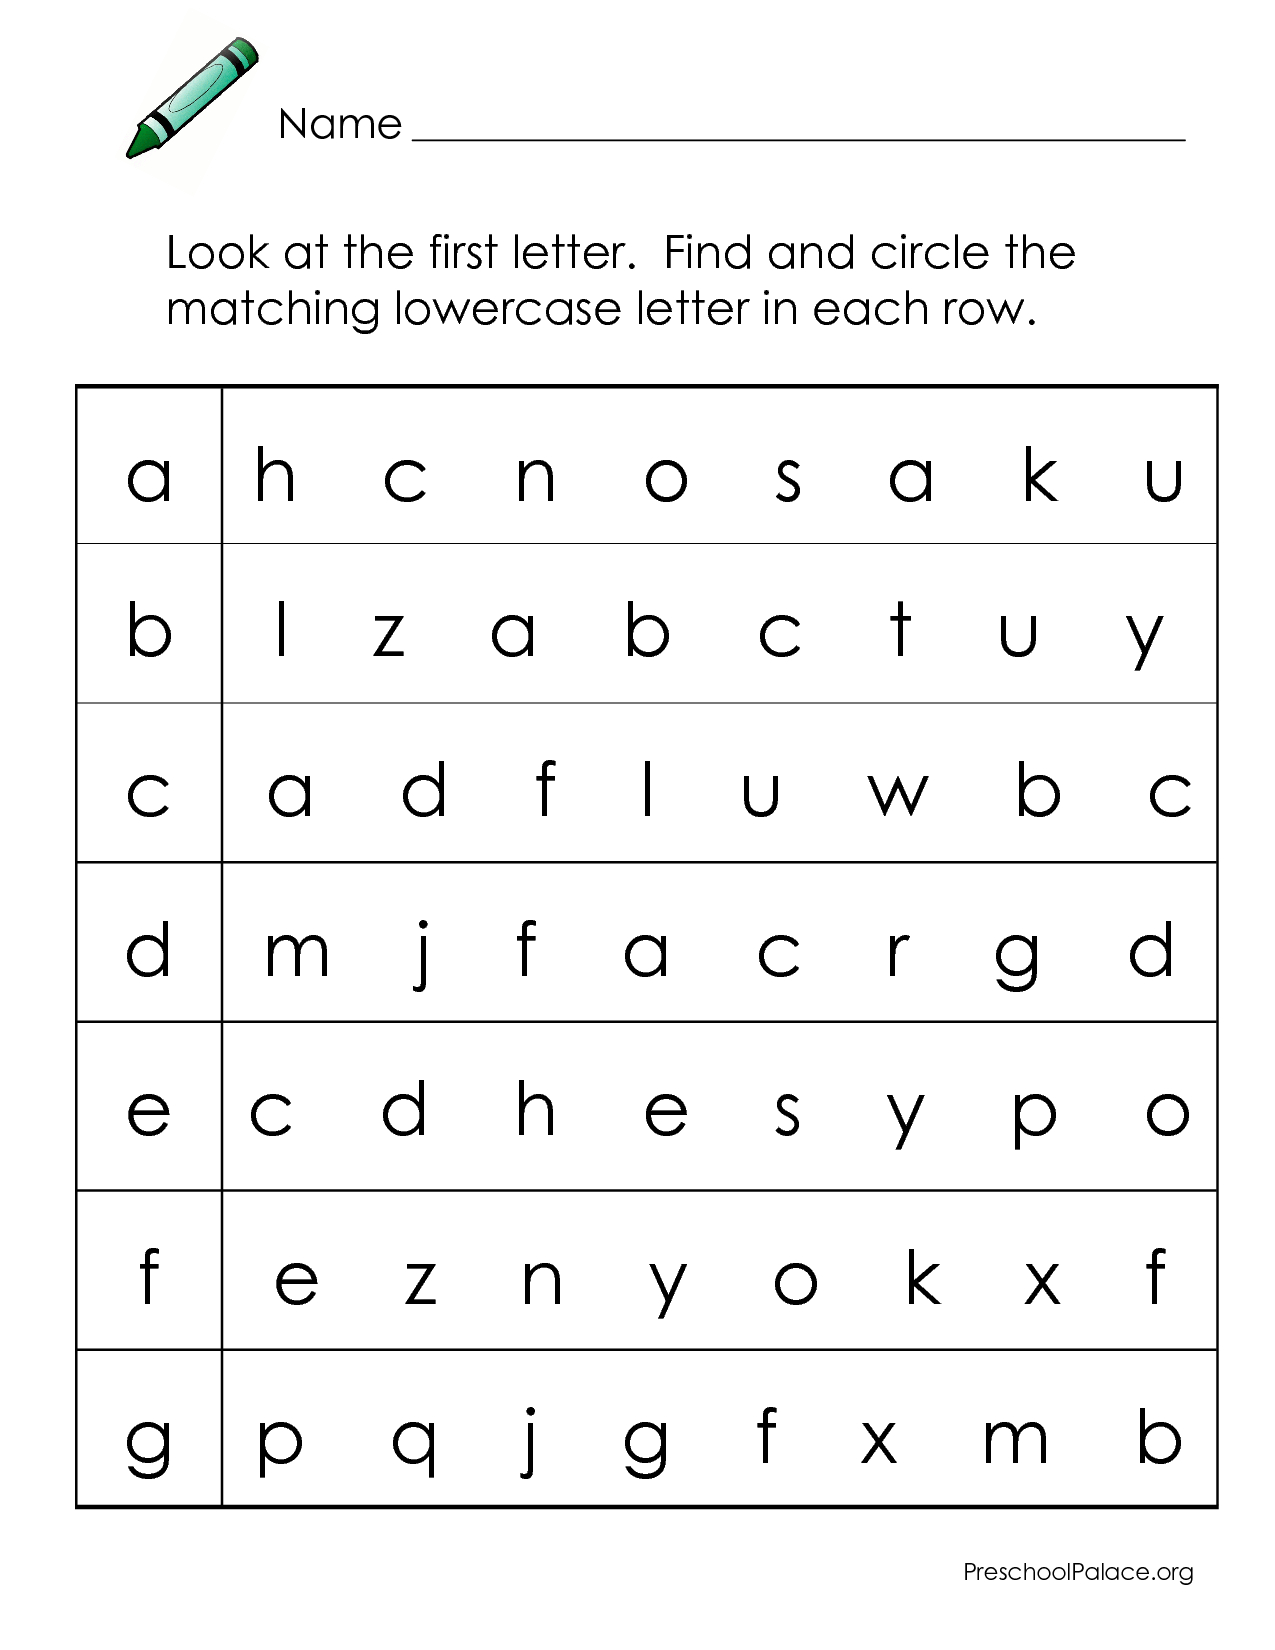 Alphabet Worksheets For Preschoolers | Abcs - Letter in Alphabet Practice Worksheets For Kindergarten